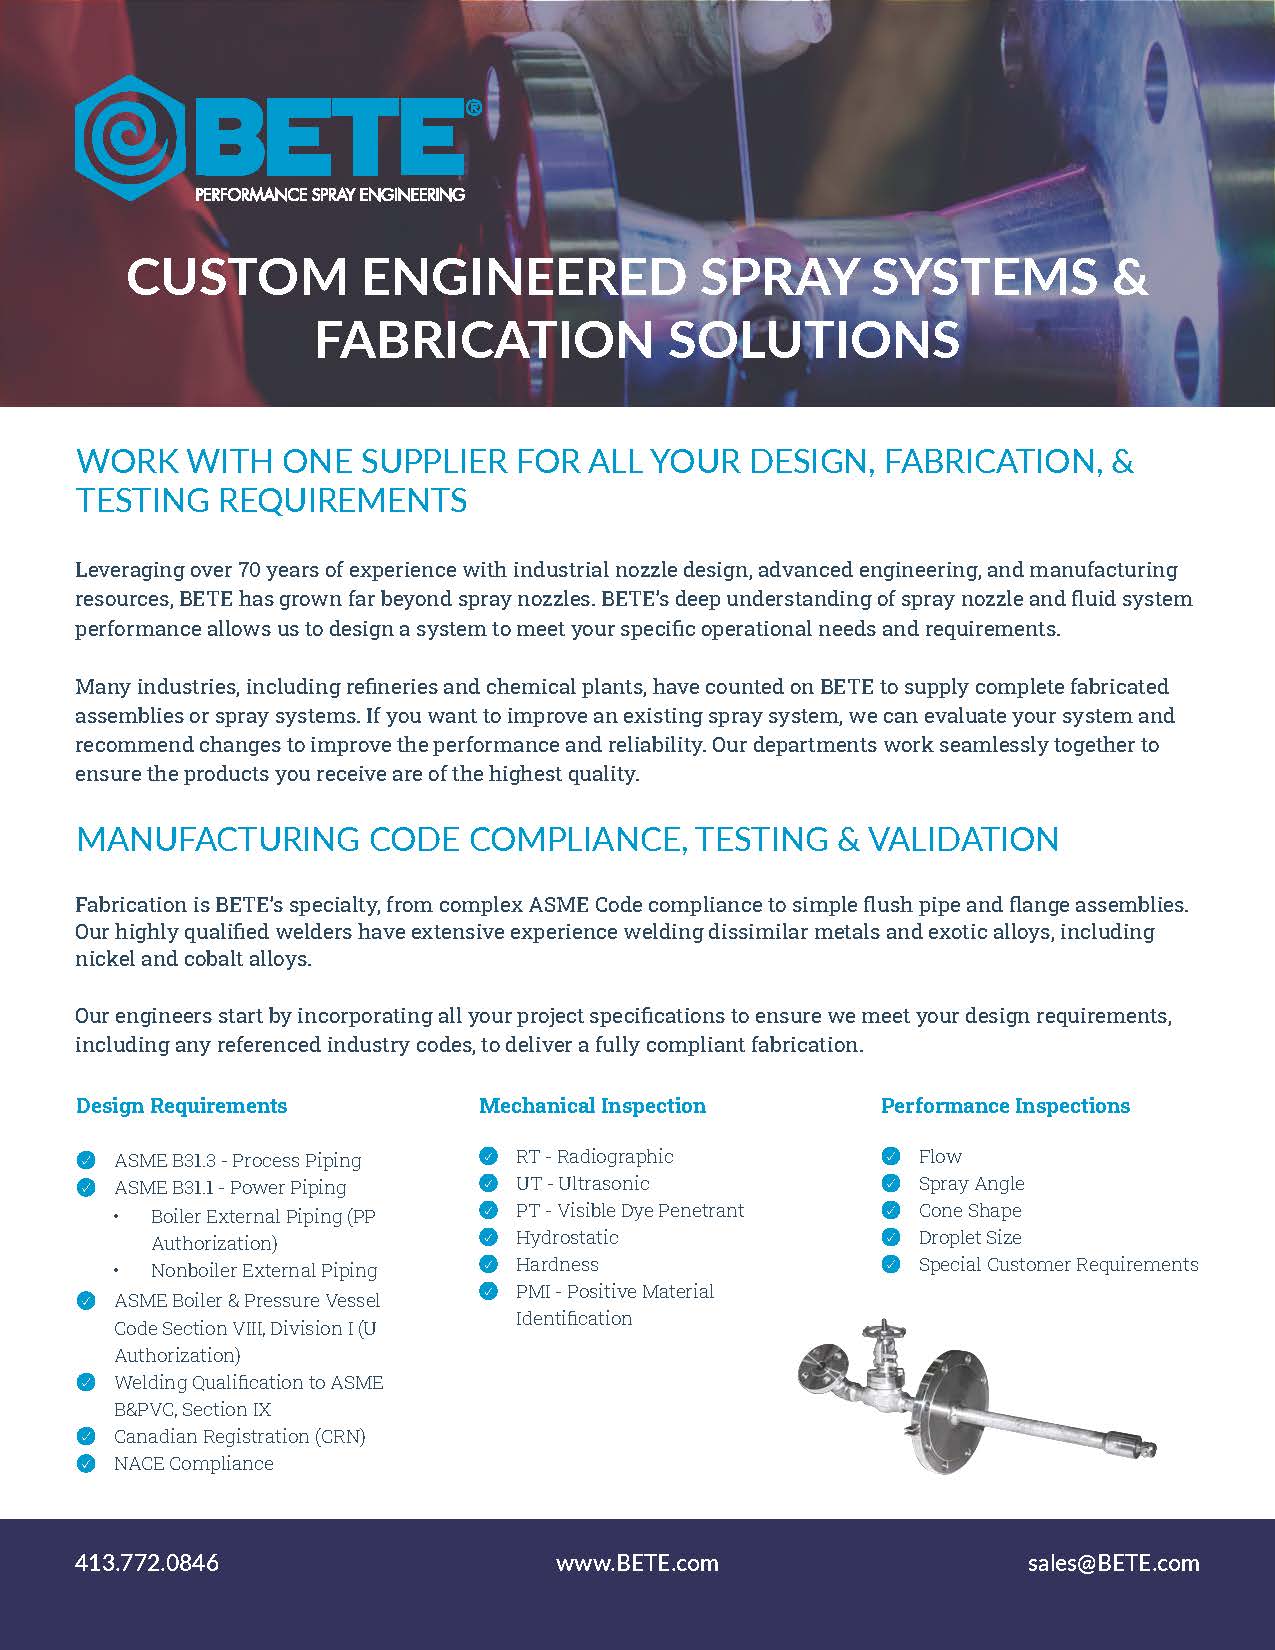 BETE Custom Engineered Spray Systems & Fabrication Solutions Line Card